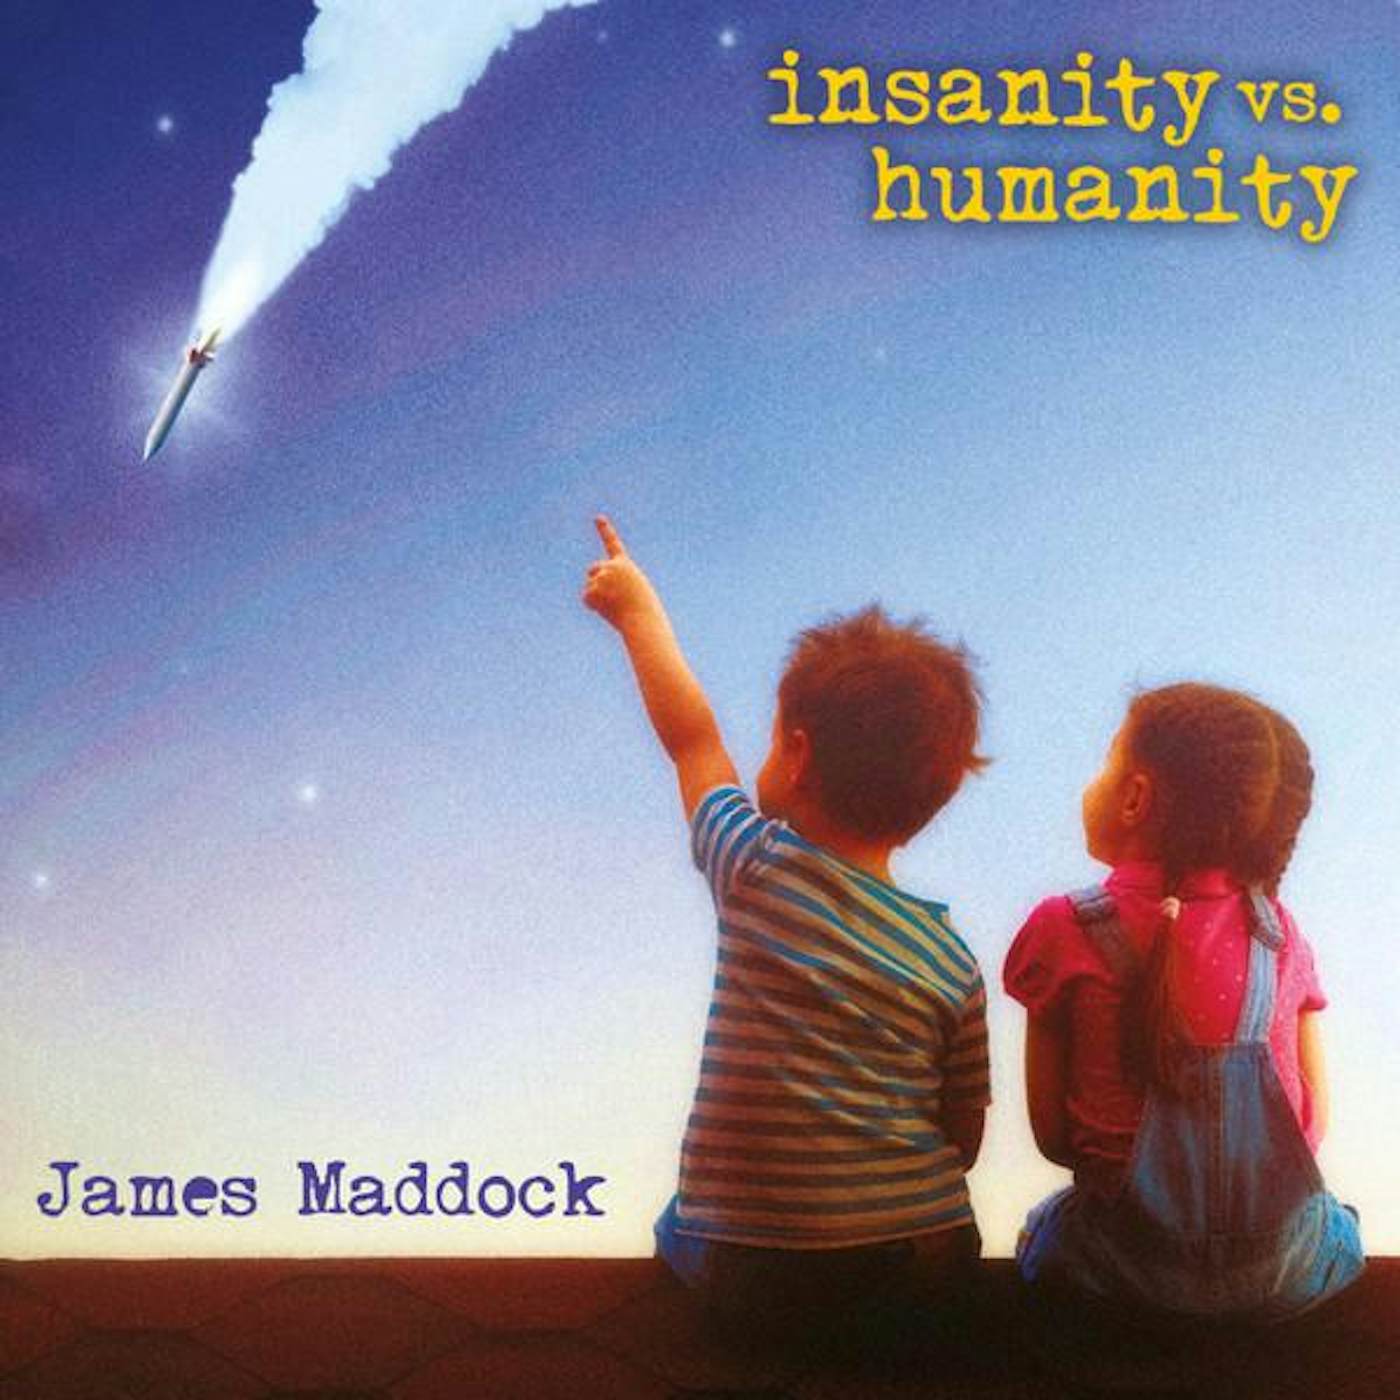 James Maddock INSANITY VS HUMANITY CD